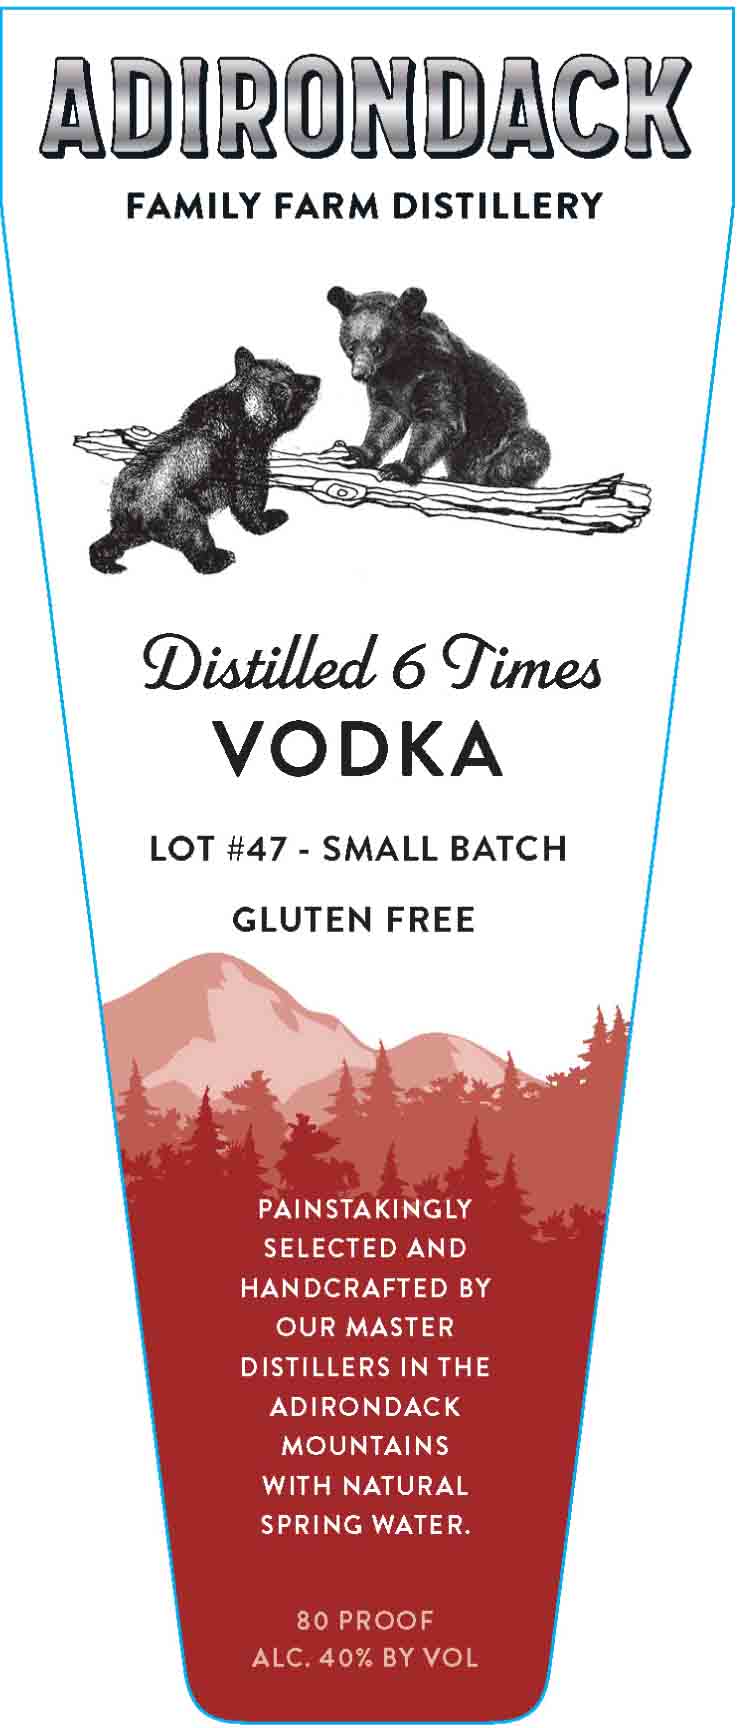 Adirondack - Distilled 6 Times Vodka label